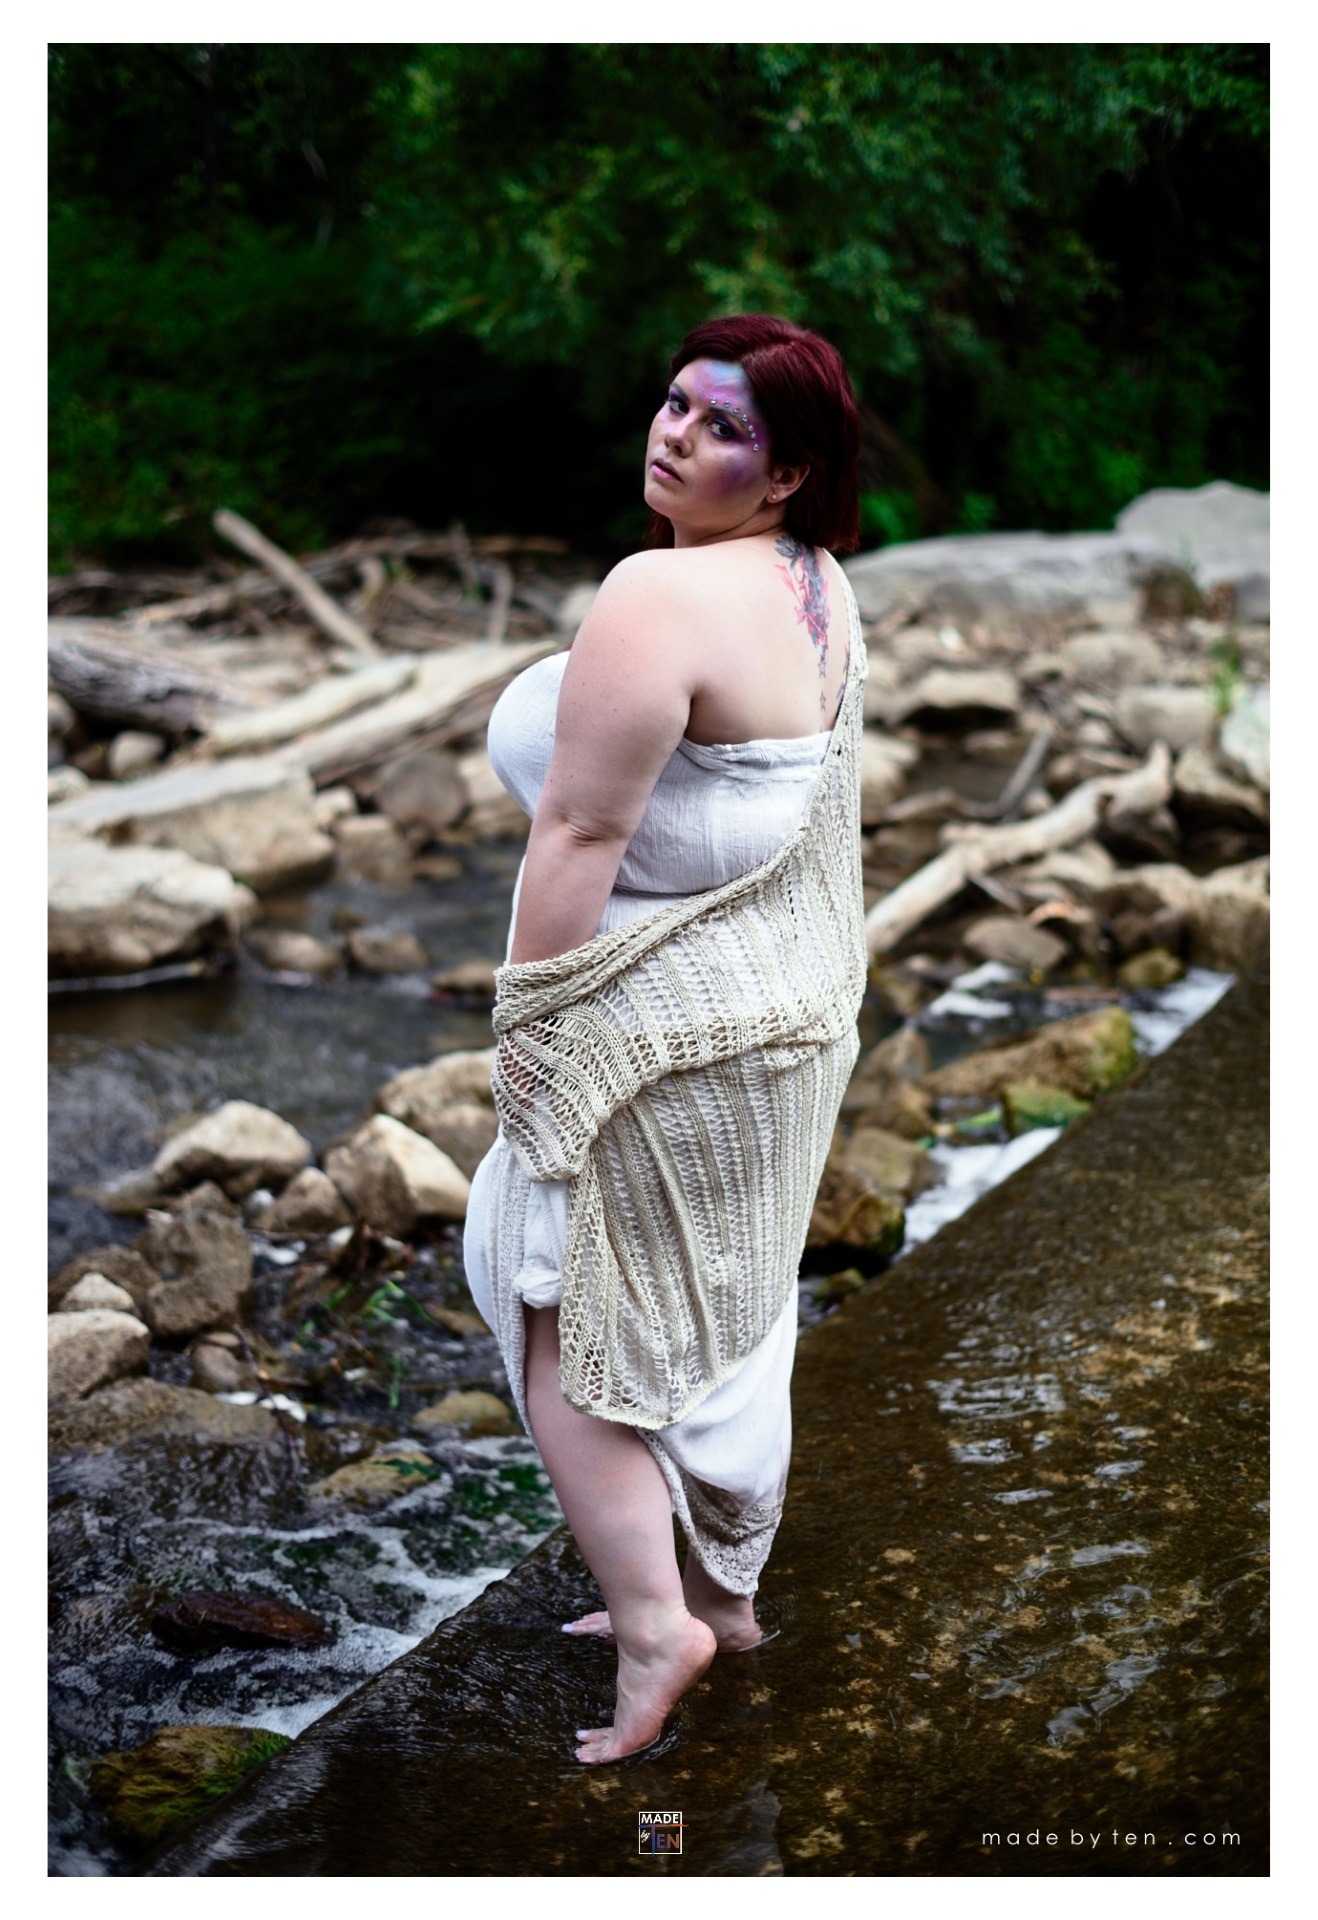 Made-by-Ten-Modern-Creative-Portrait-Photography-GTA-Women-Toronto-Mermaid-Fantasy-4.jpg